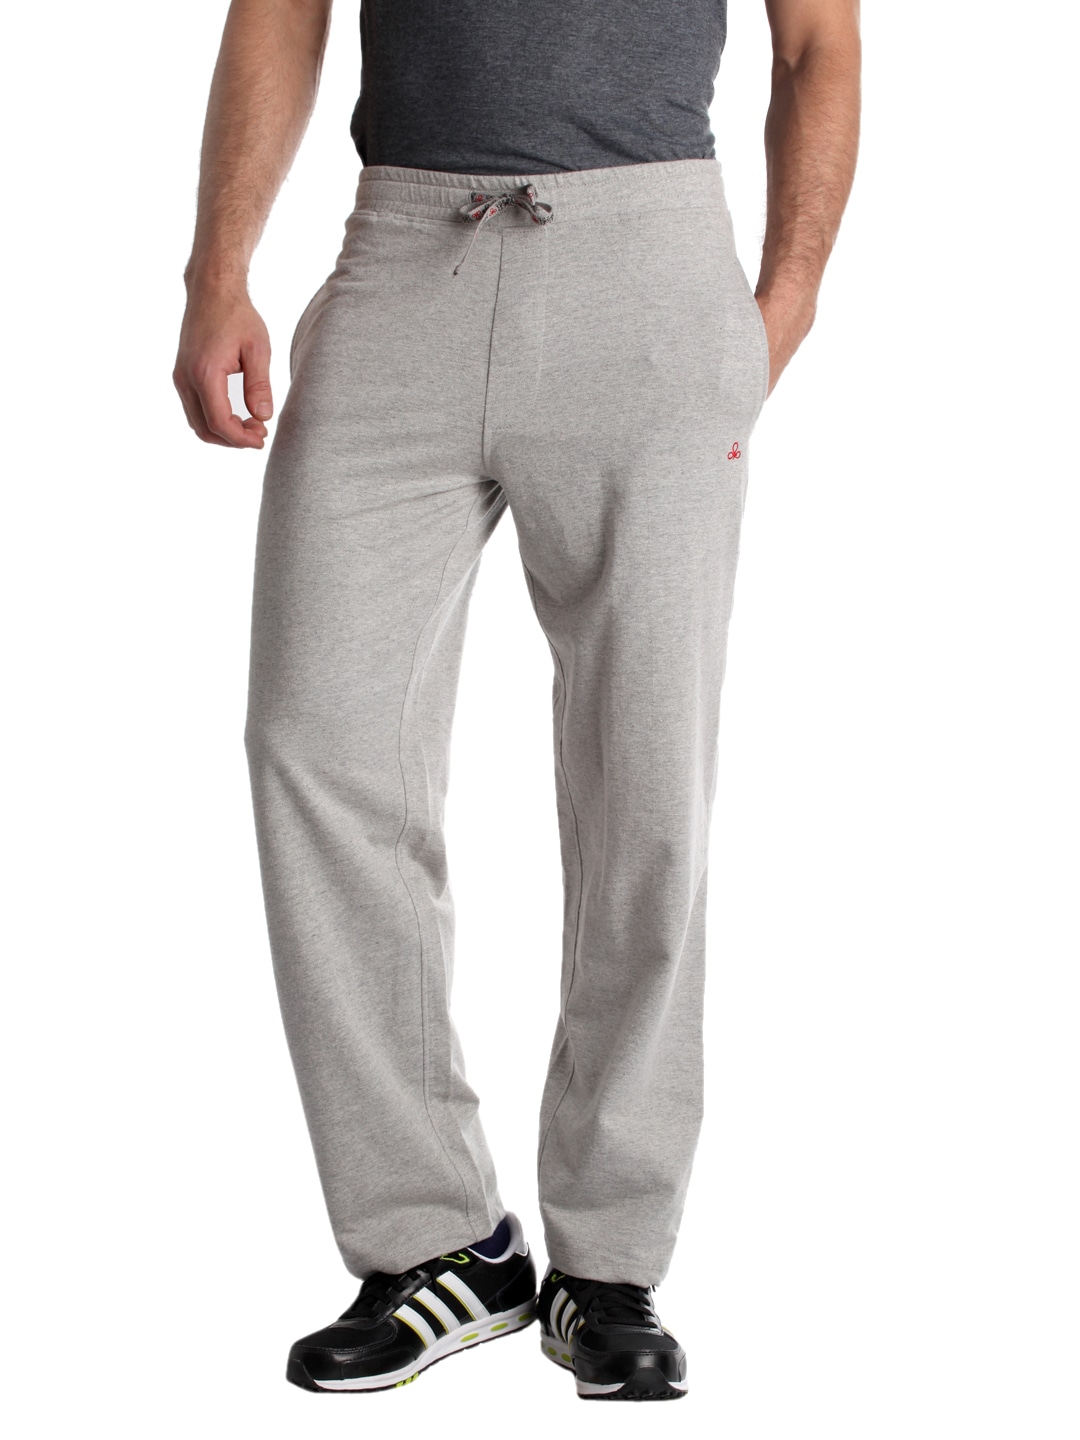 Urban Yoga Men Grey Track Pants